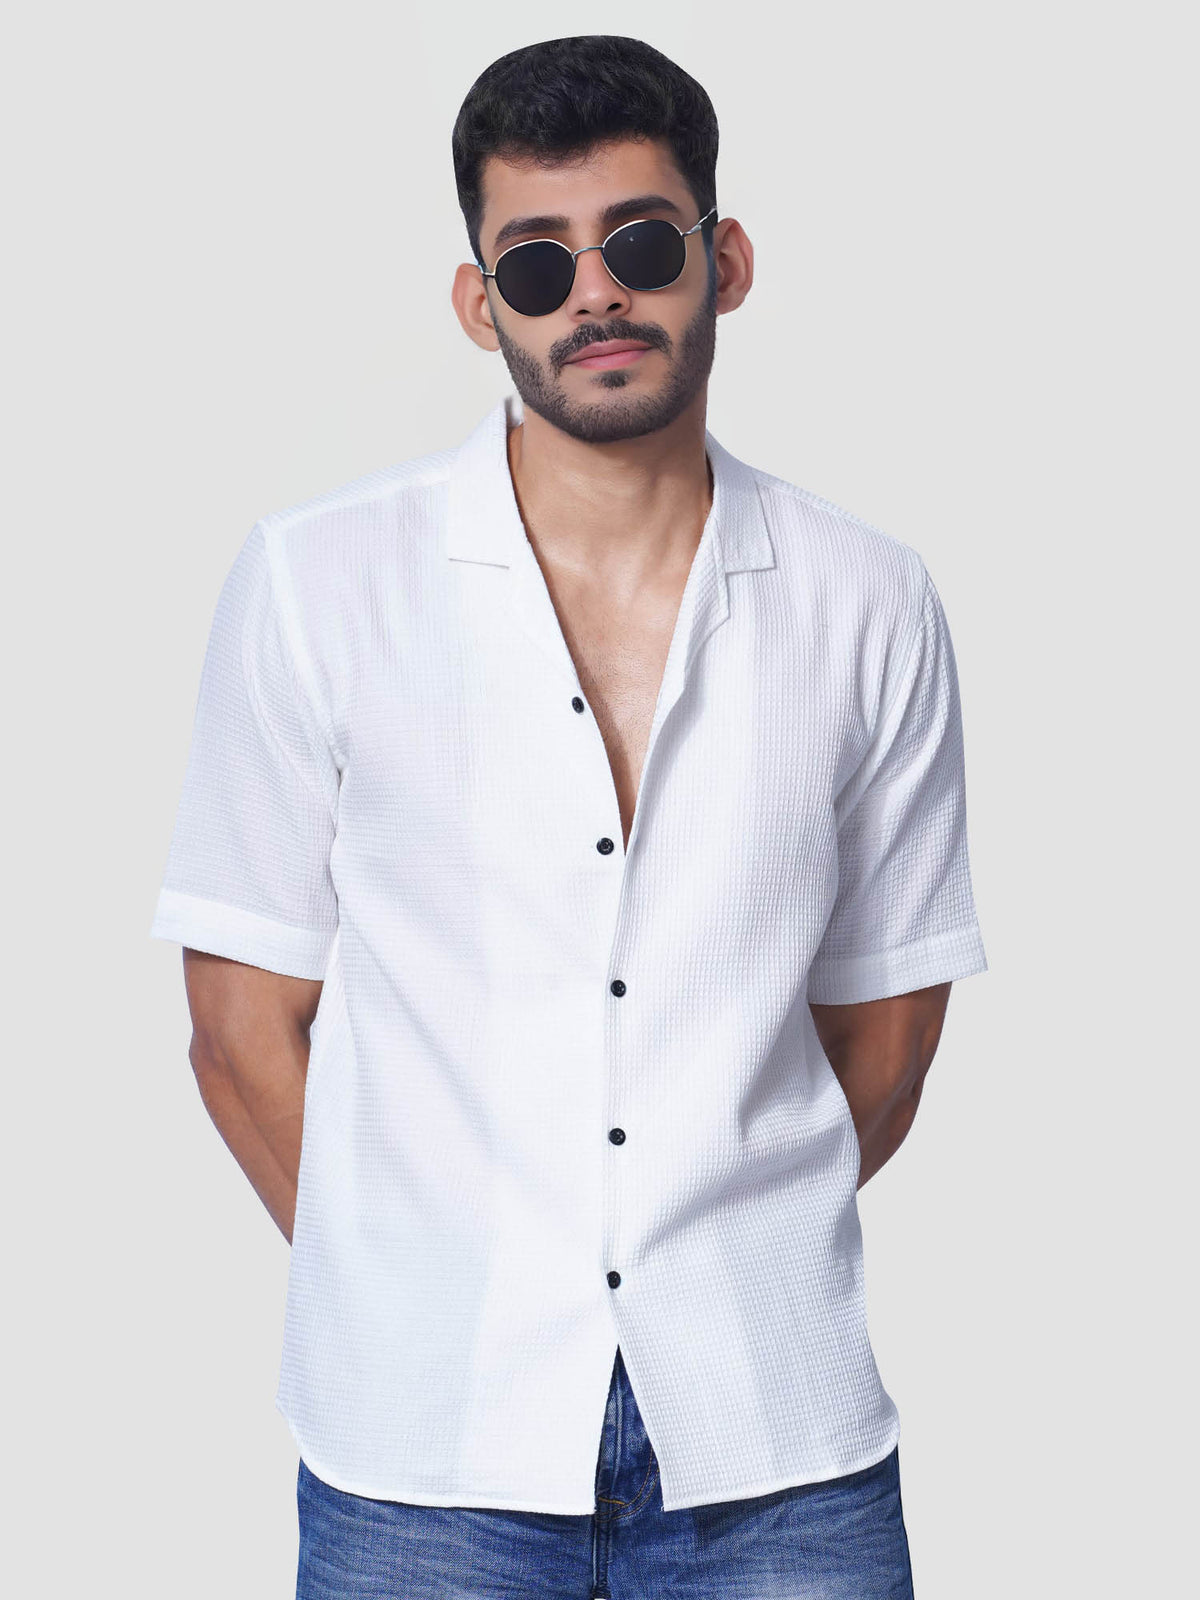 Self Designed White Shirt